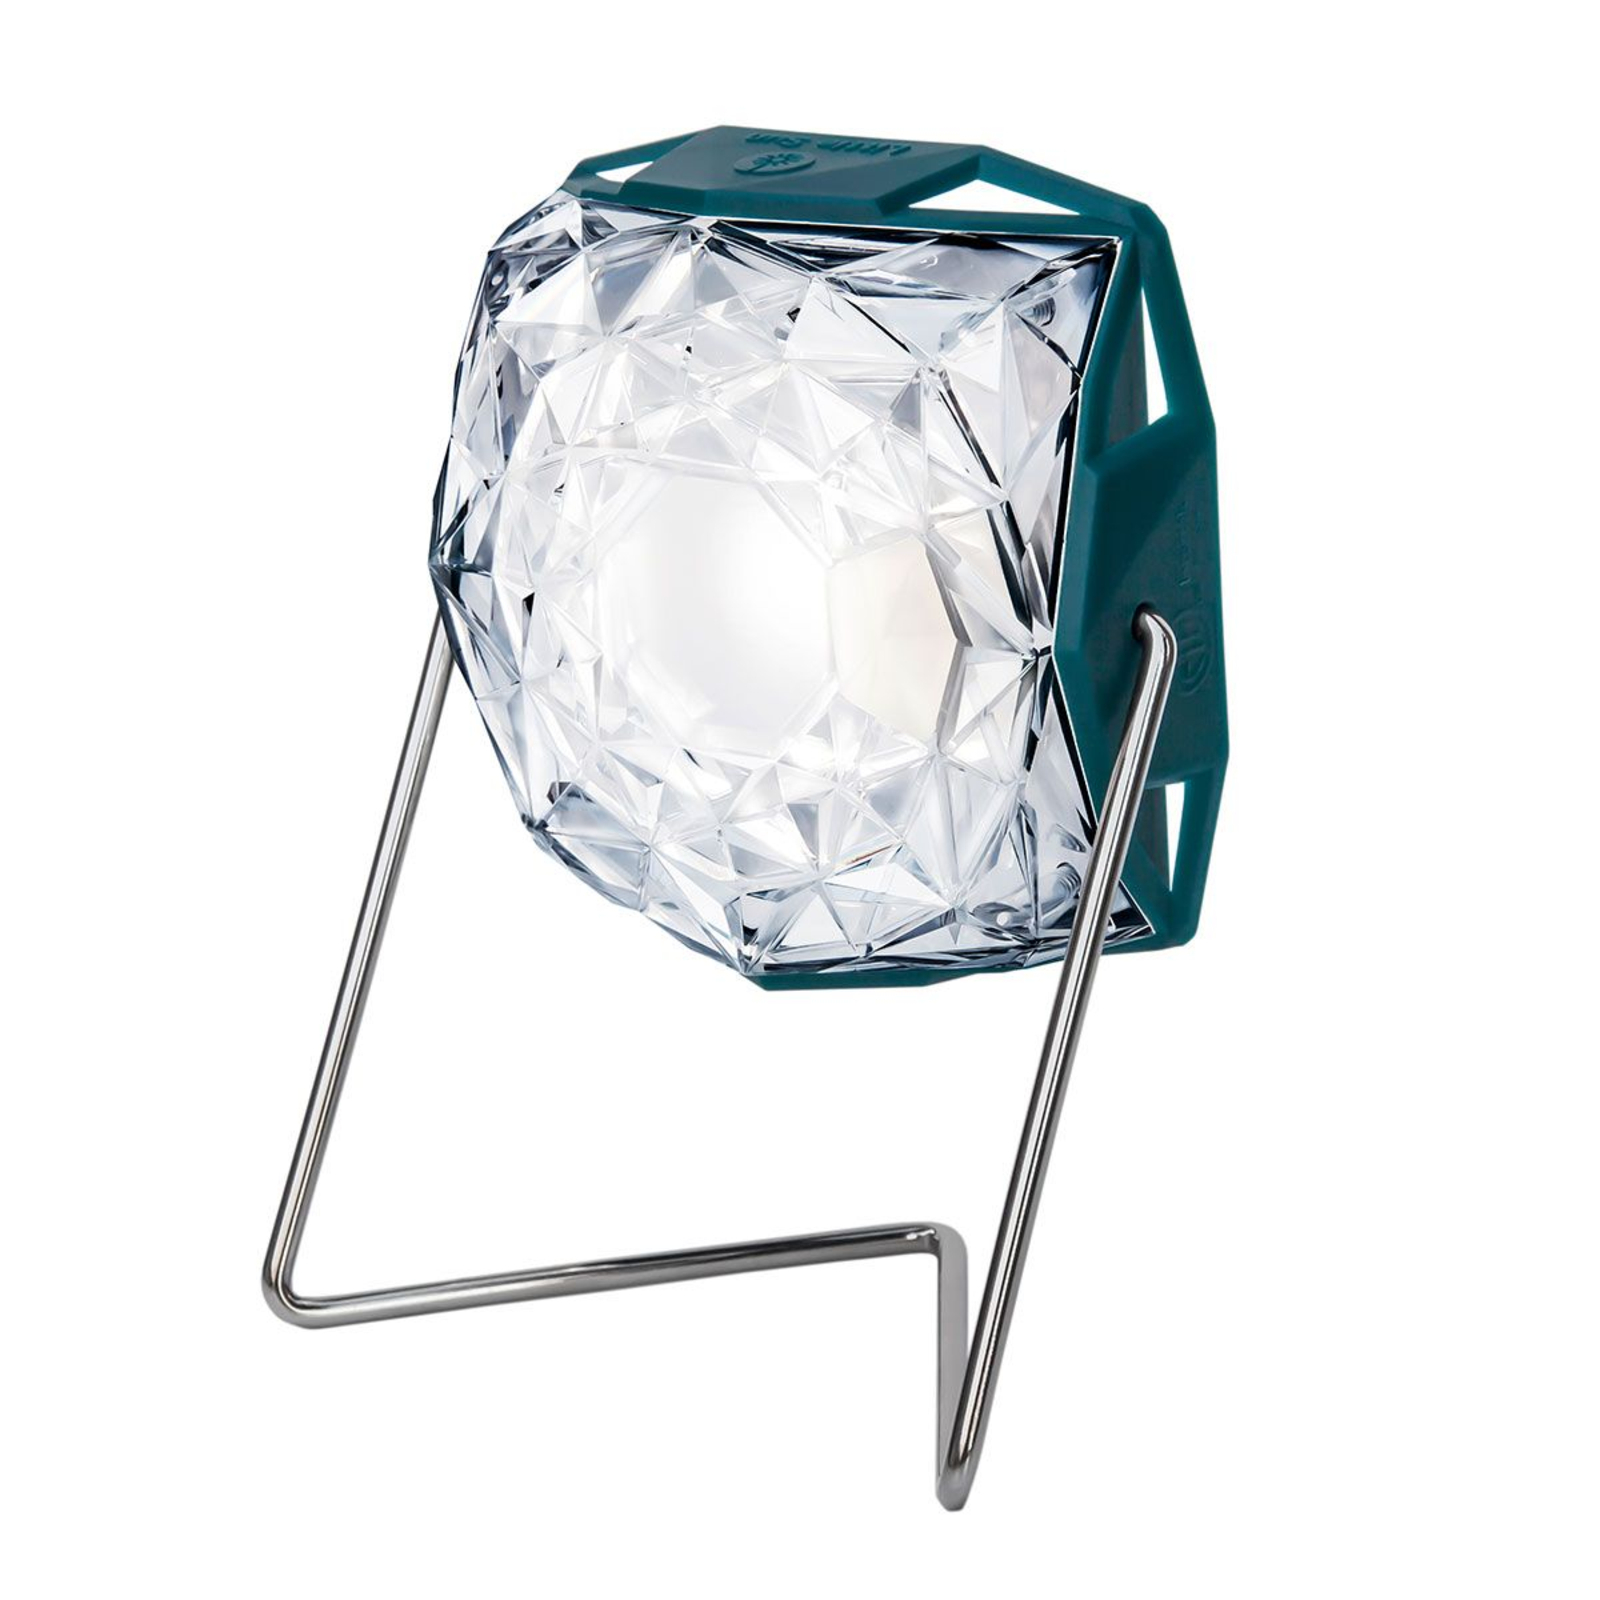 Little Sun Diamond lampa solarna LED ze stojakiem